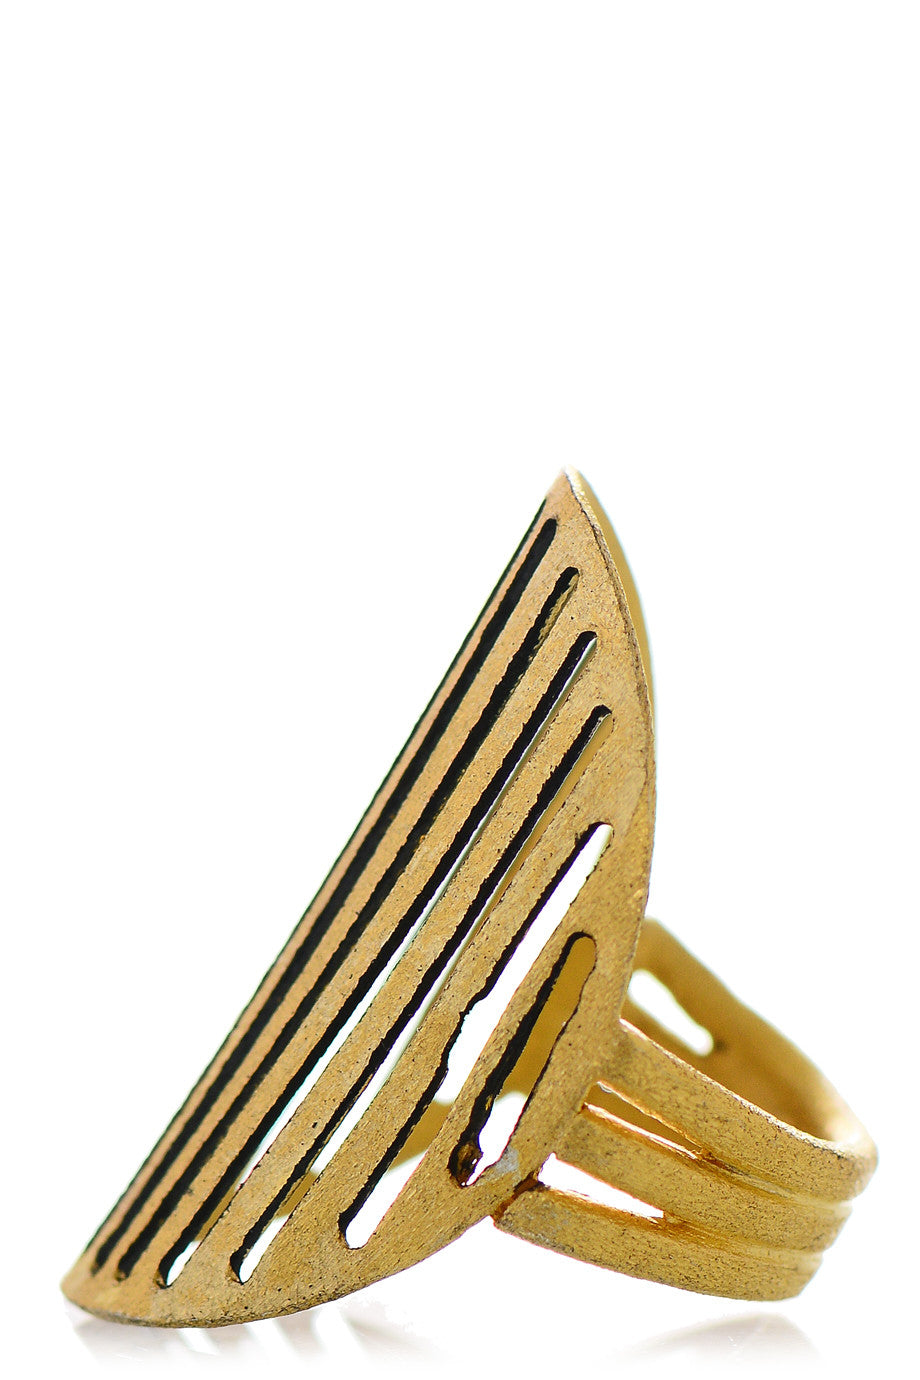 Hermione Xειροποίητο Χρυσό Δαχτυλίδι 14K | Κοσμήματα Δαχτυλίδια | Hermione 14K Gold Ring